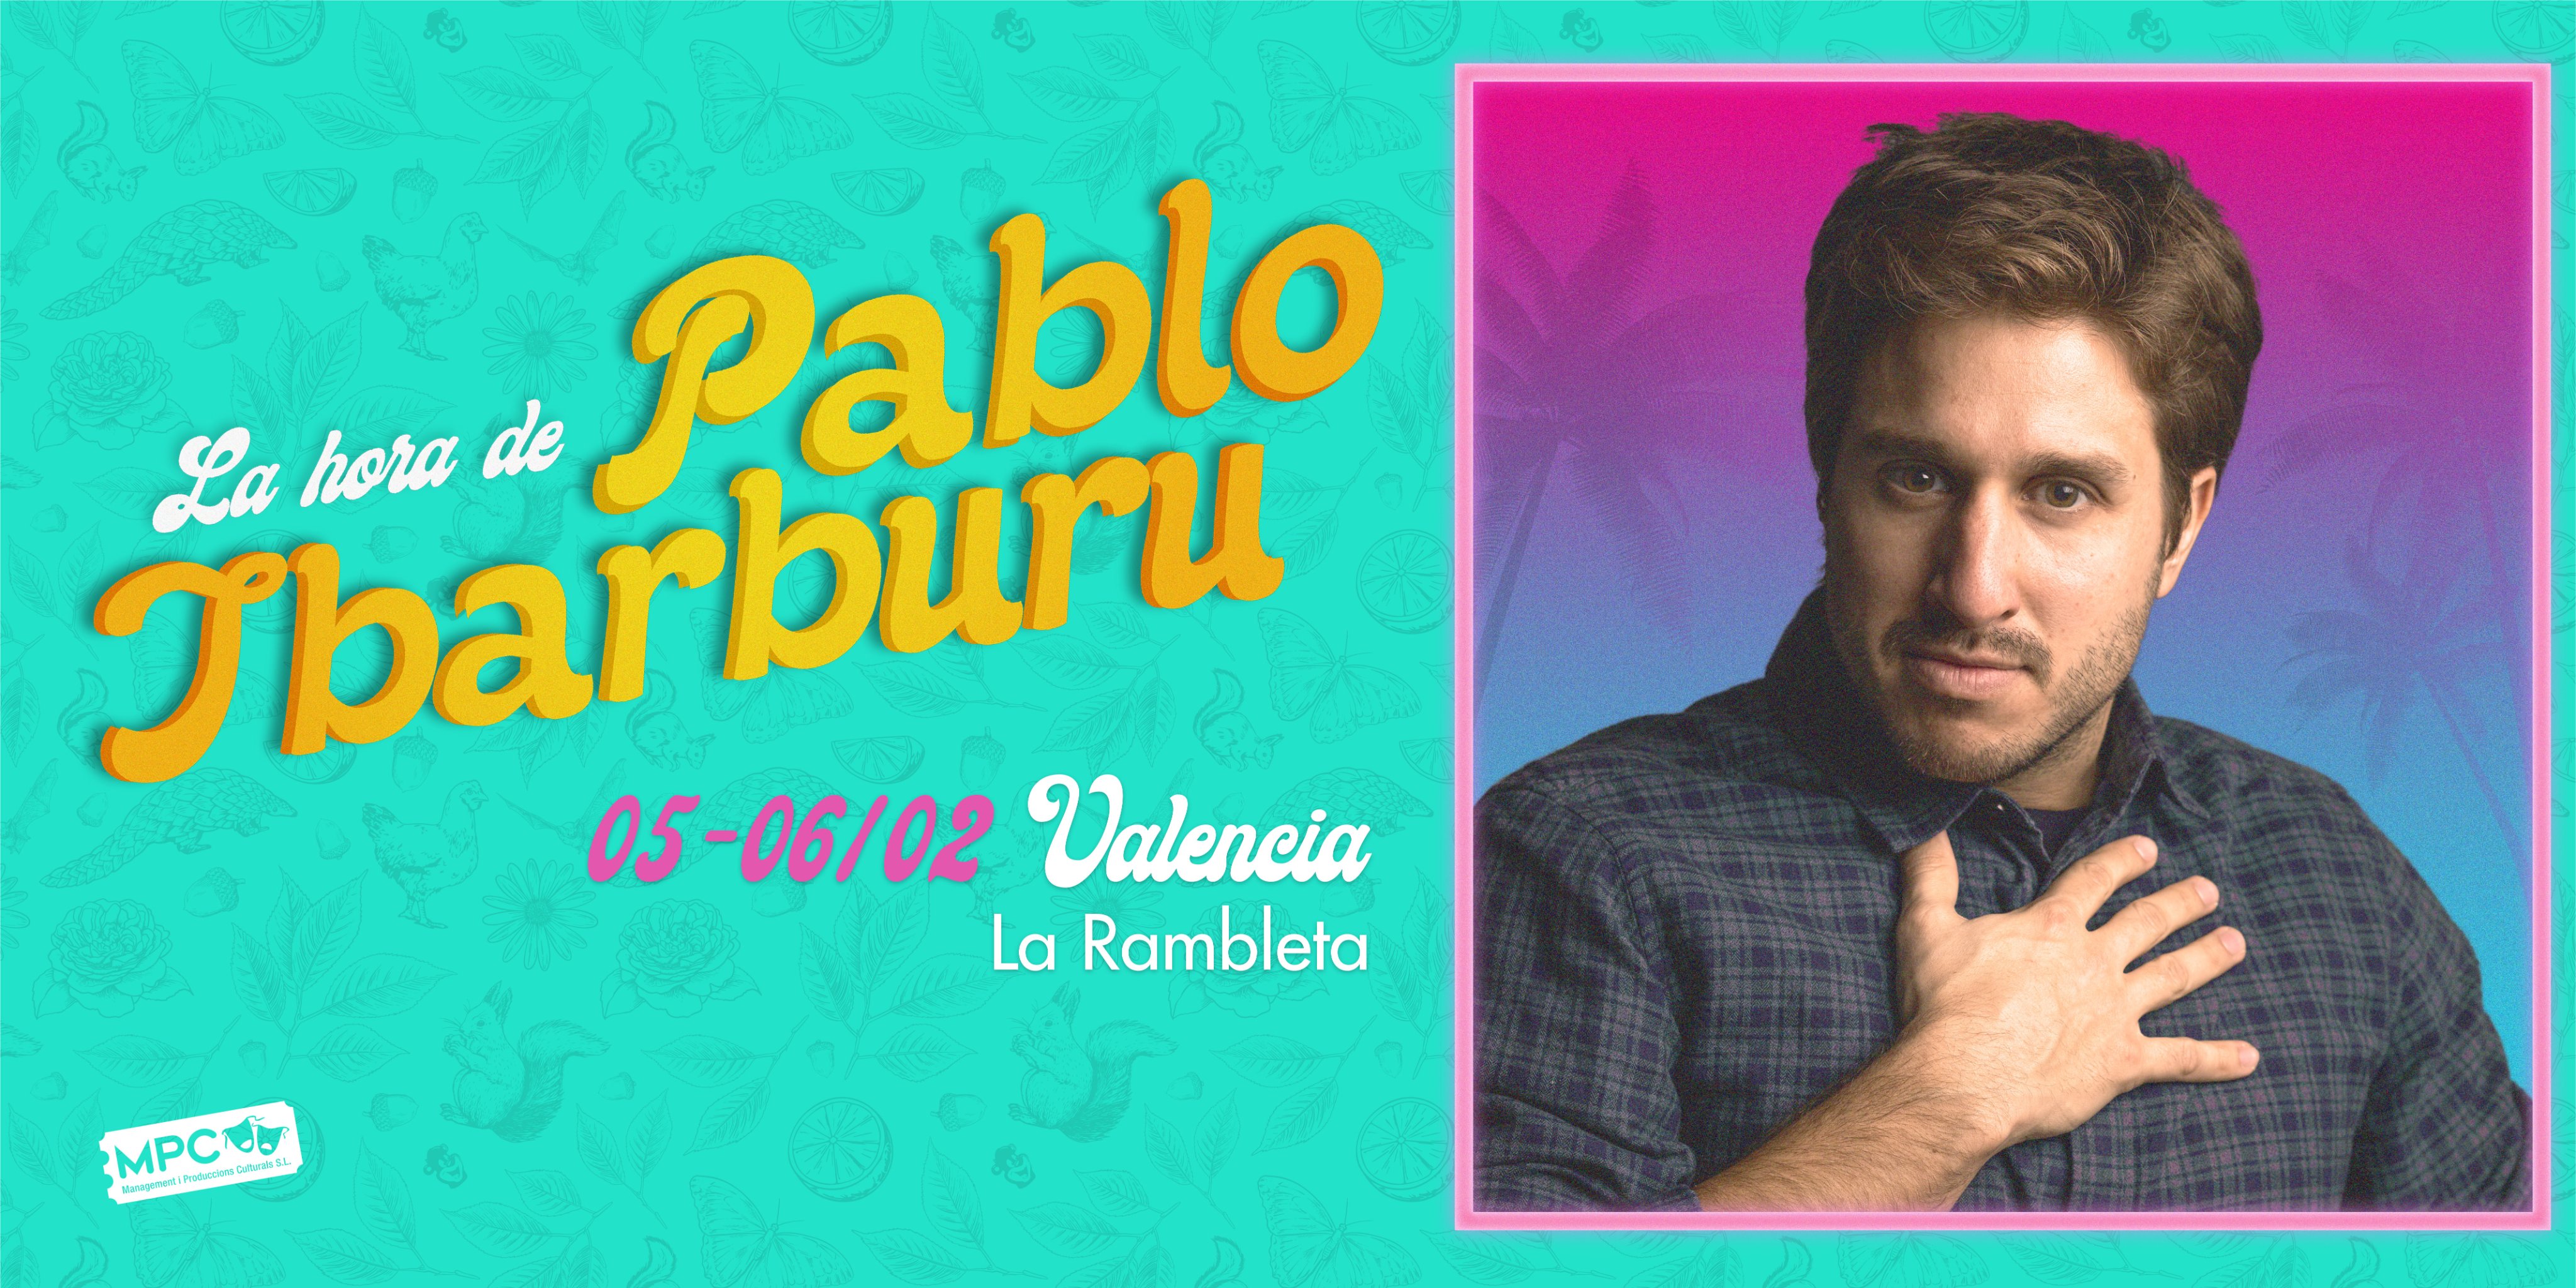 El humorista Pablo Ibarburu en La Rambleta